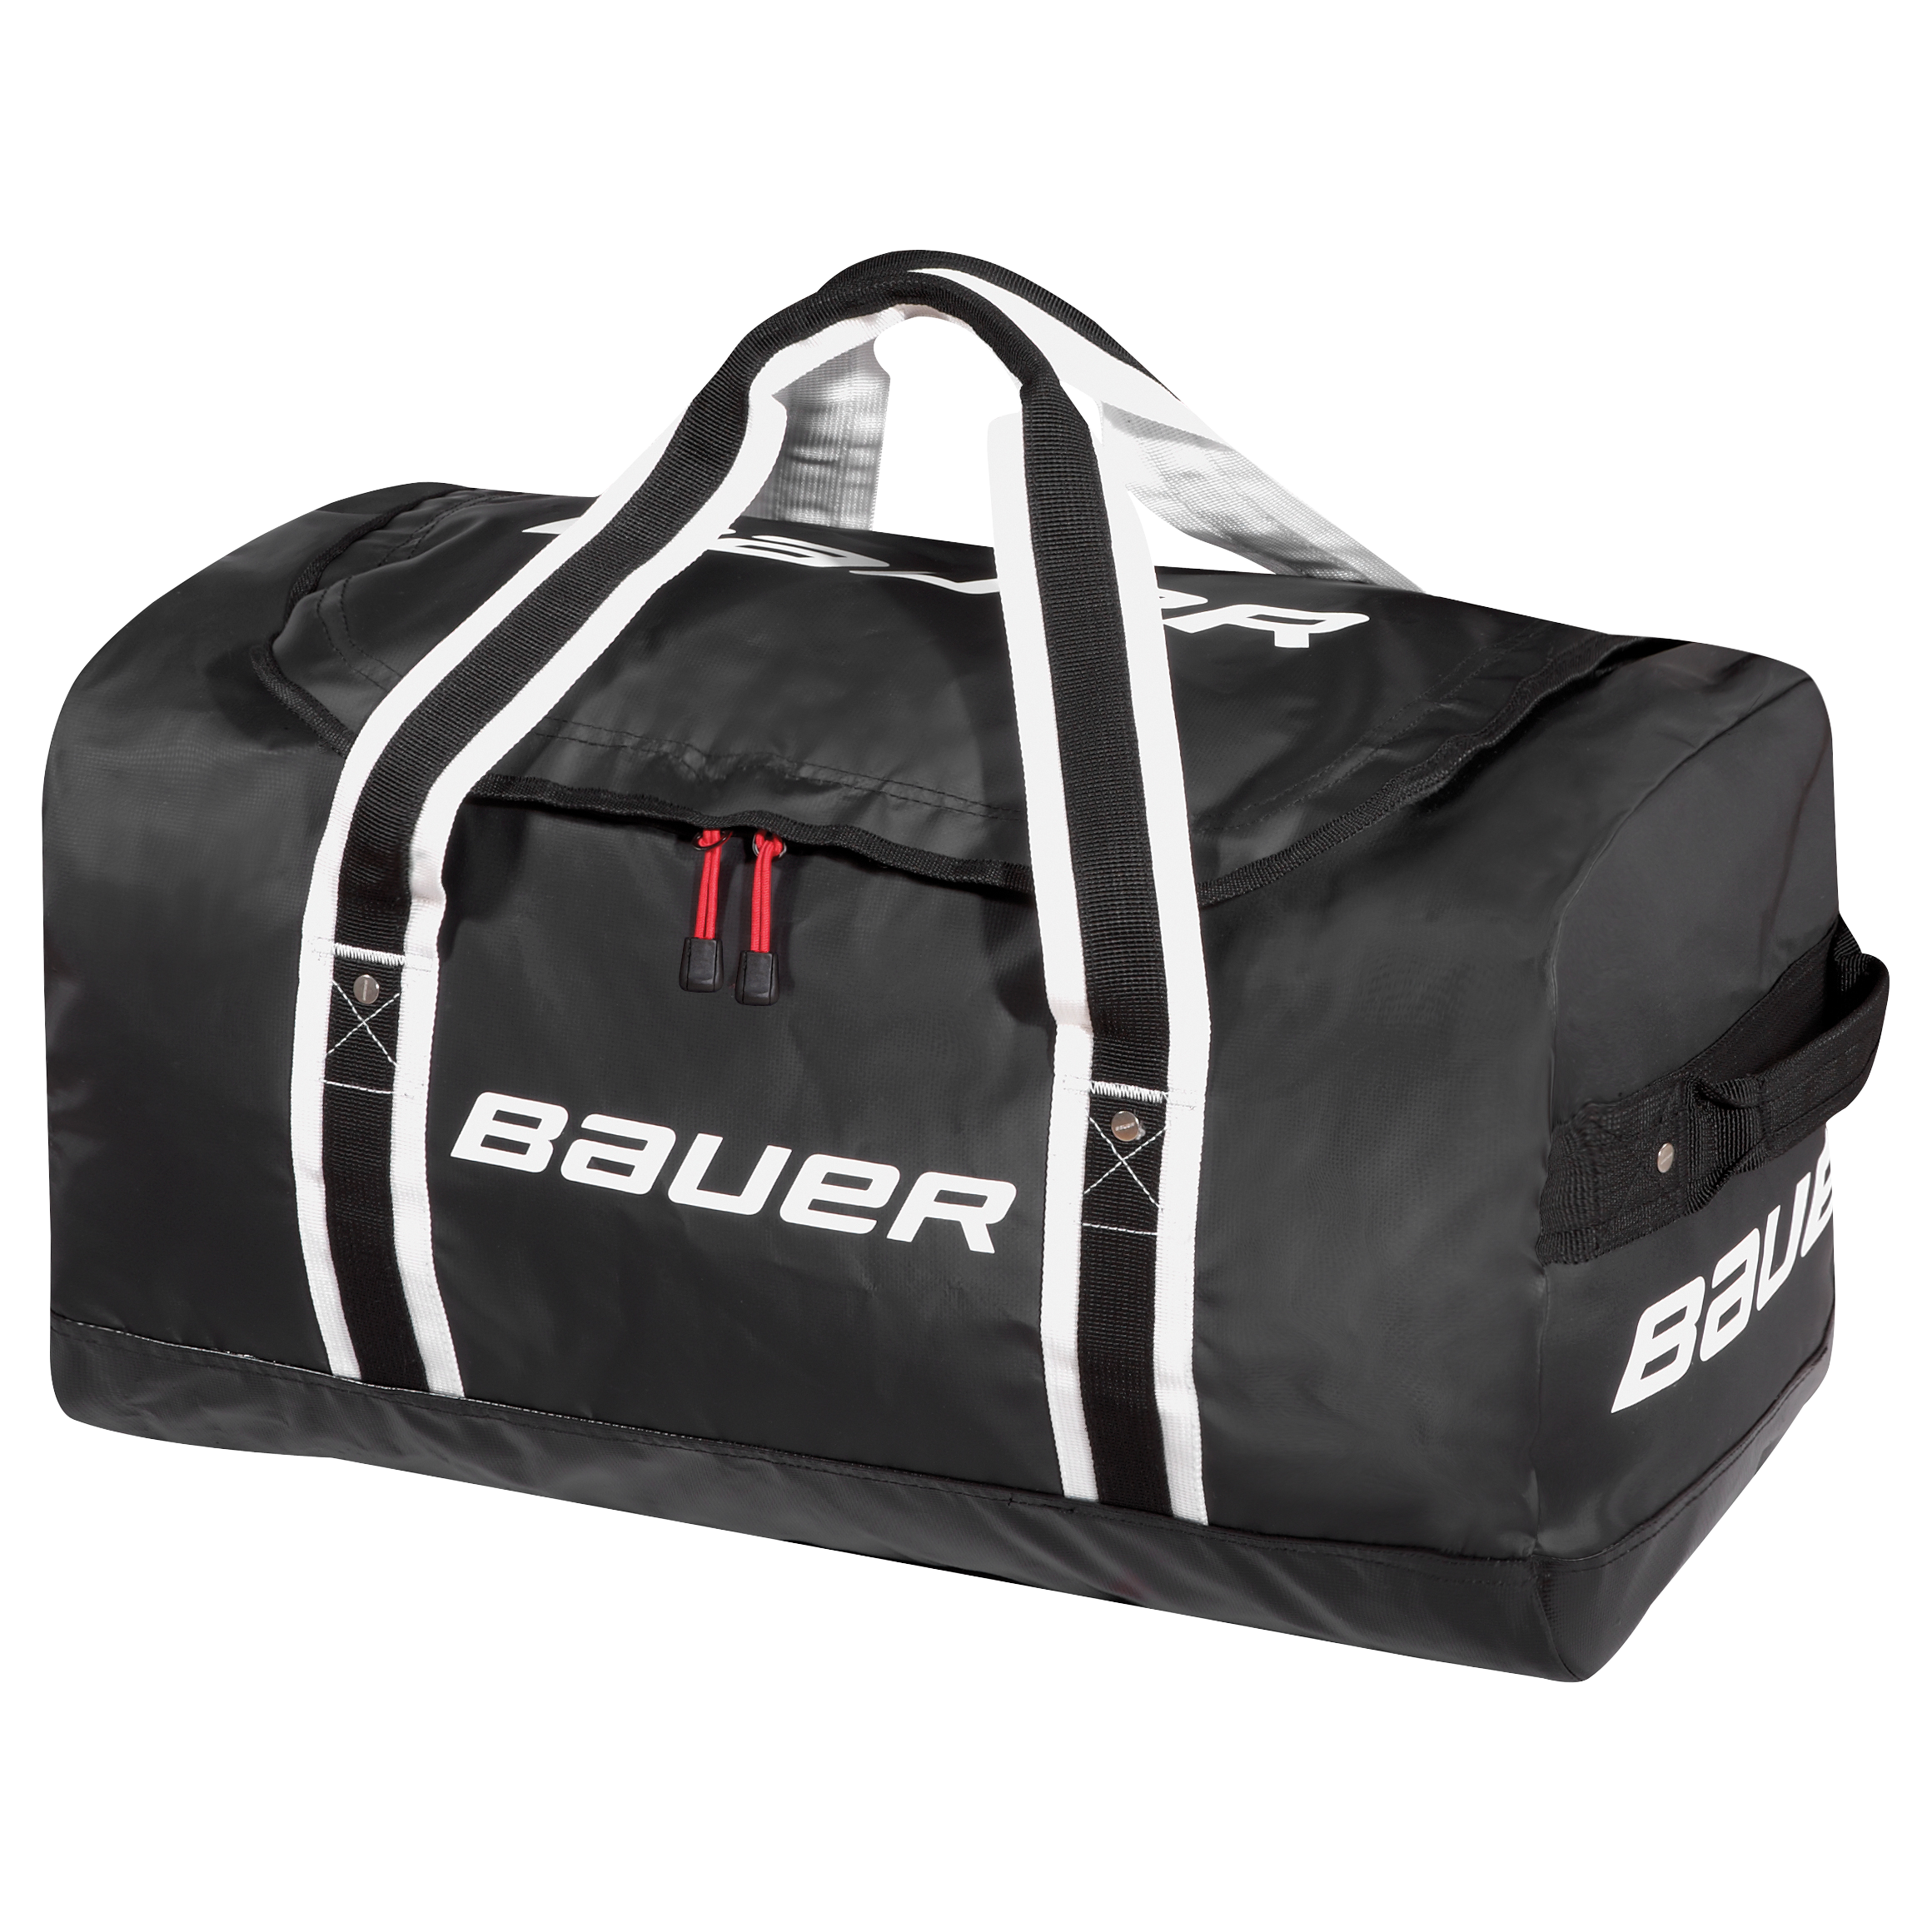 bauer 950 hockey bag